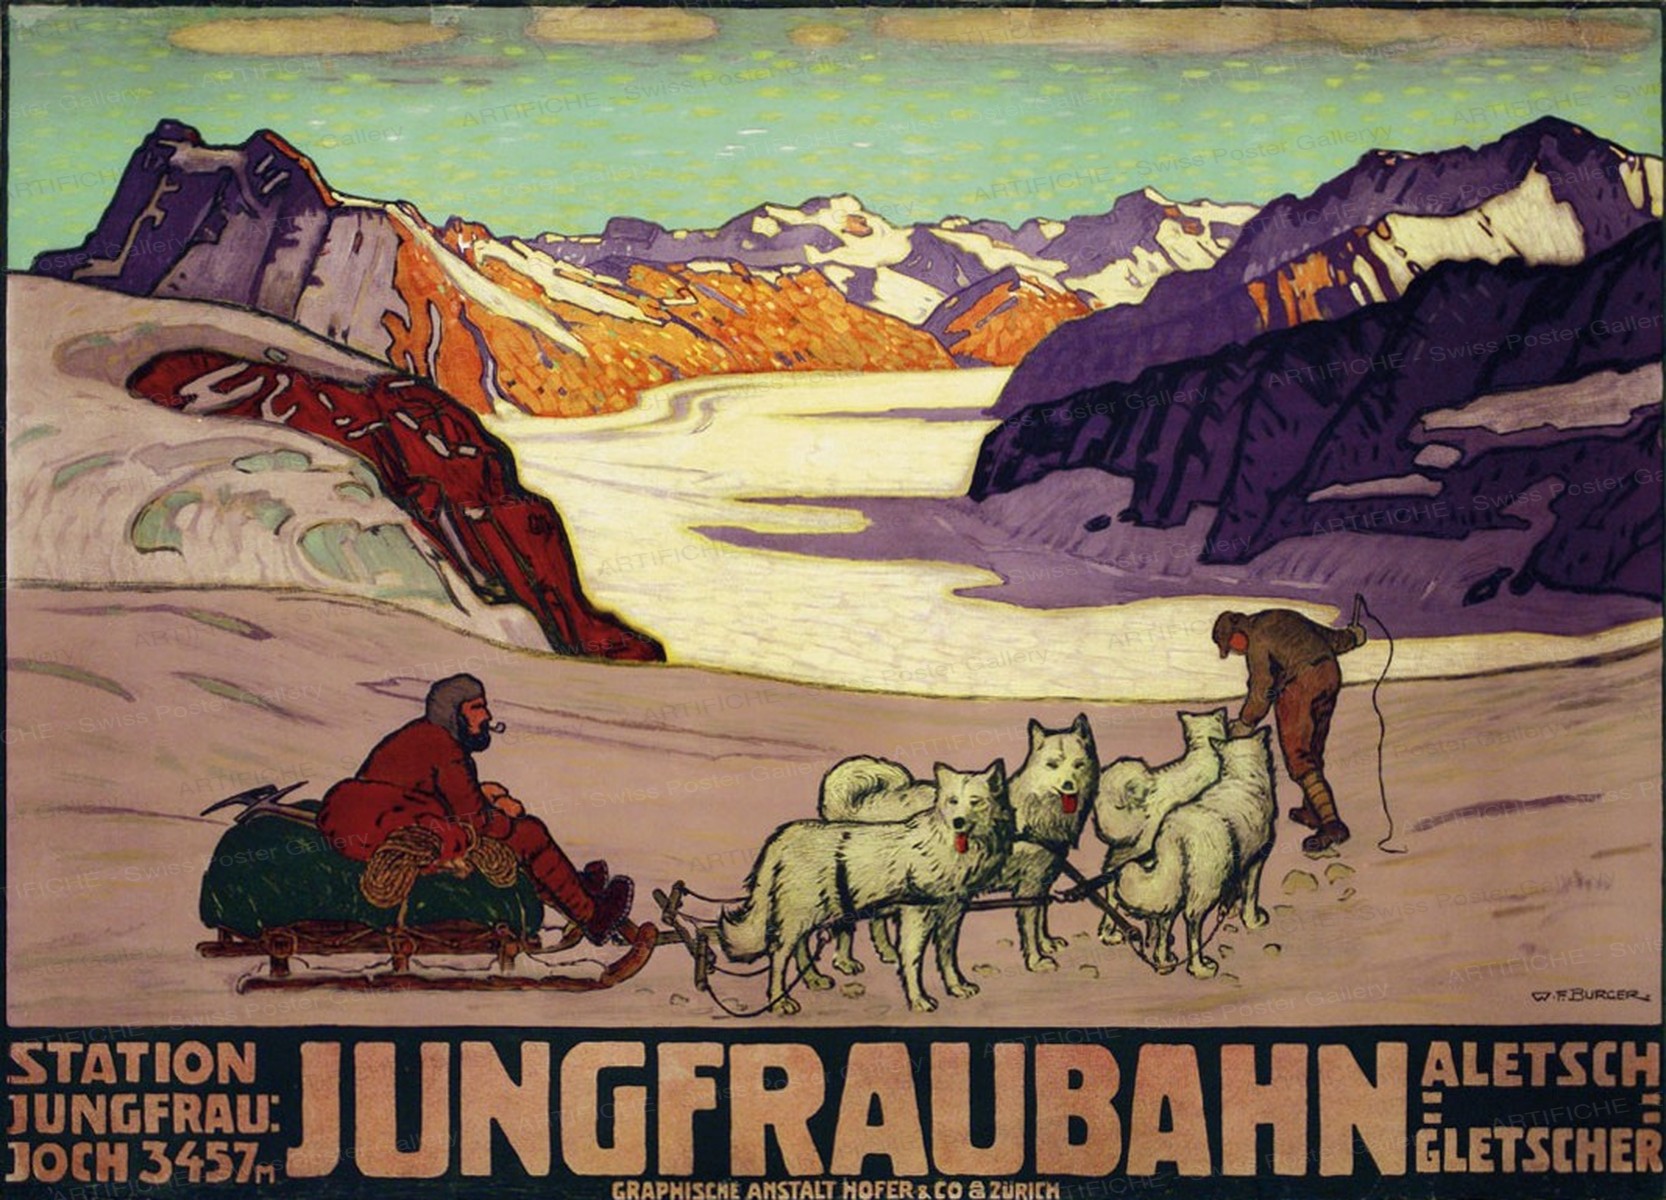 Jungfraubahn Station Jungfrau Joch, Aletsch Gletscher, Wilhelm Friedrich Burger